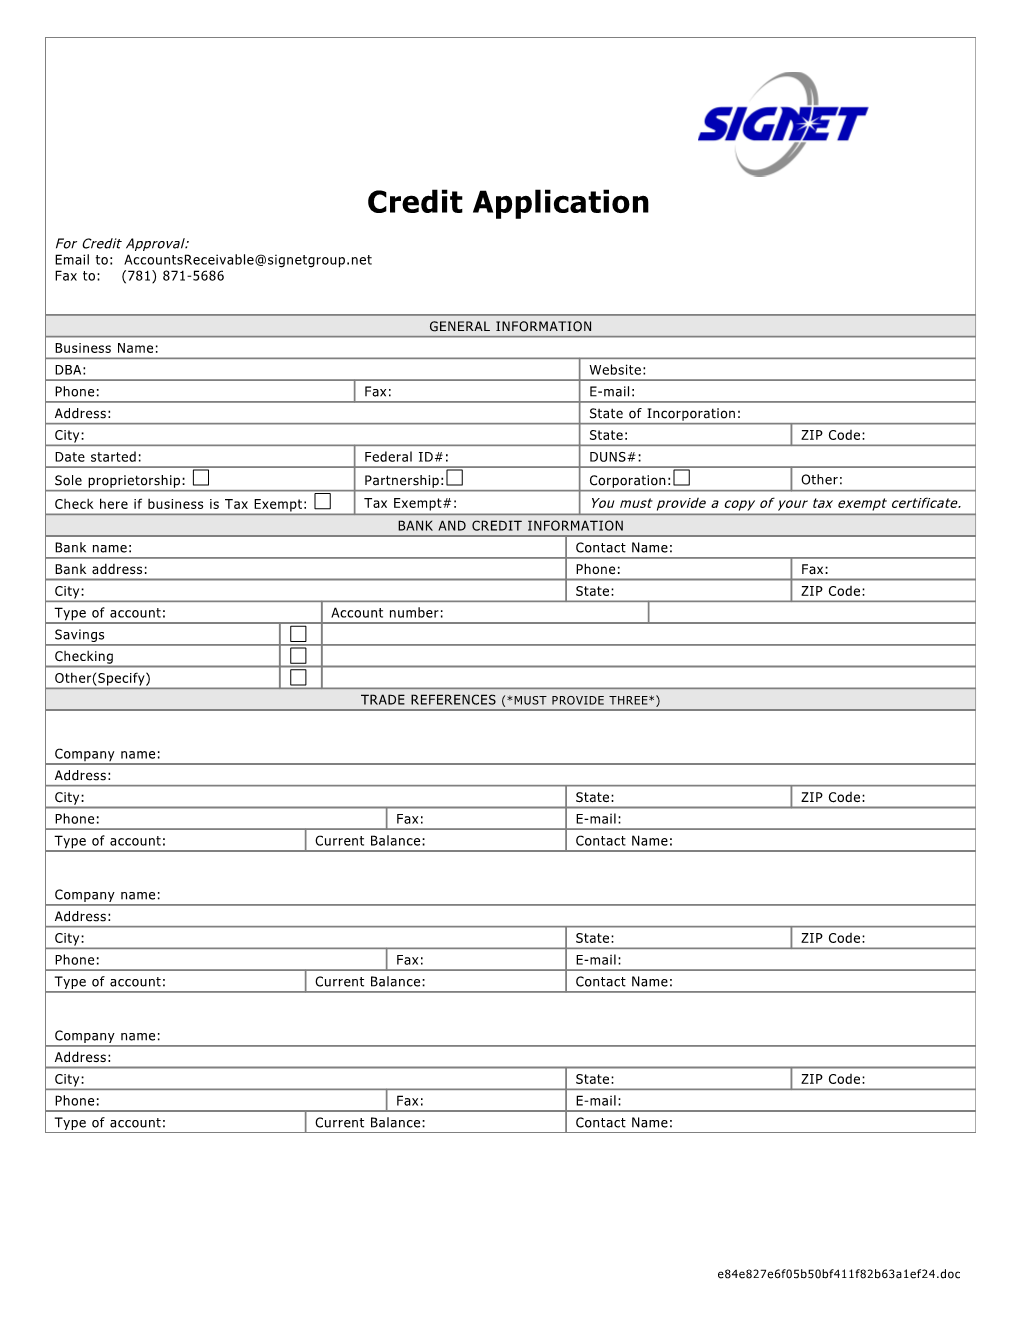 Credit Application 2010-2